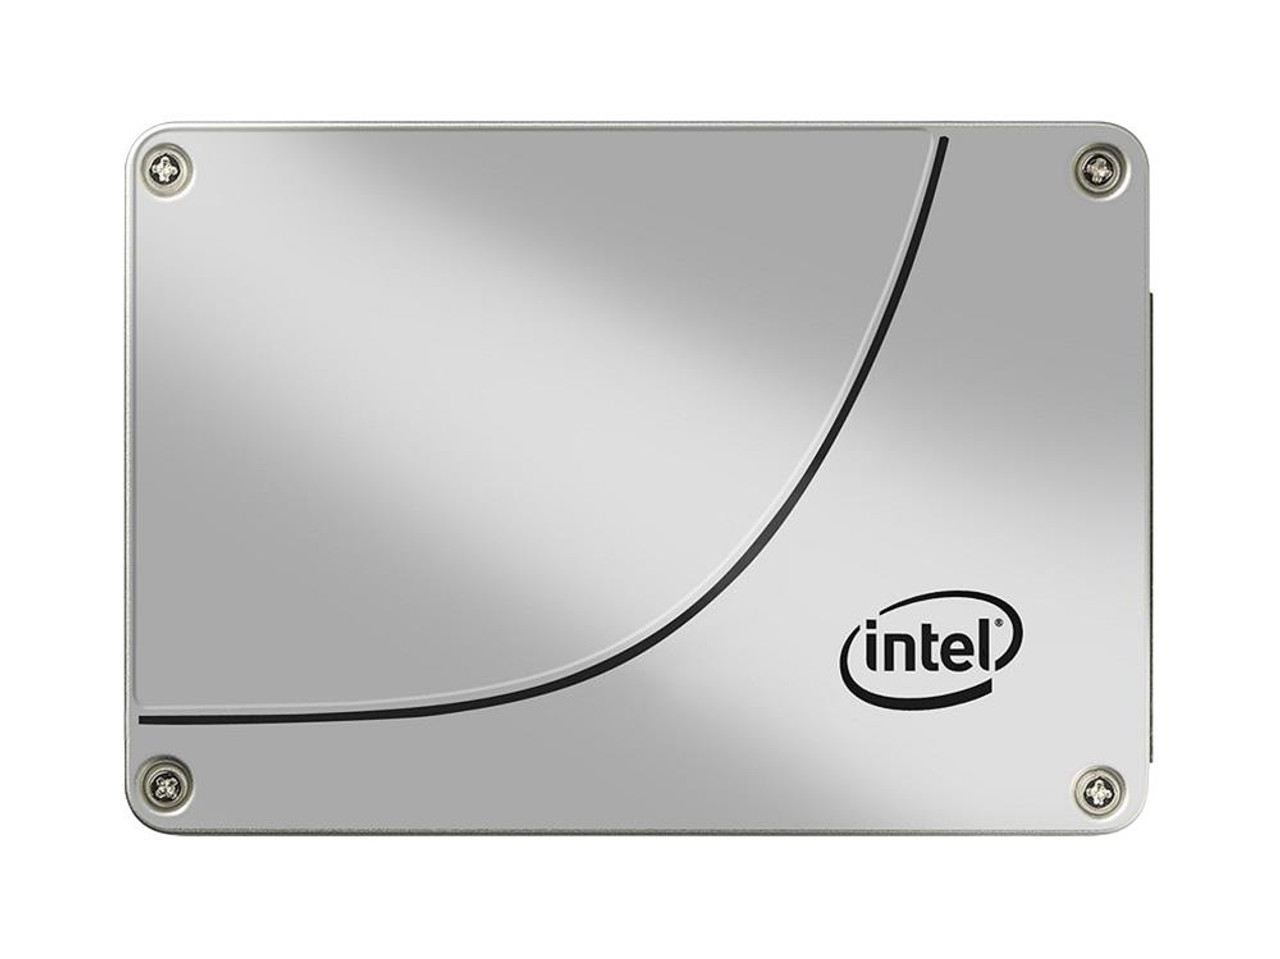 90127Y Intel 320 Series 80GB MLC SATA 3Gbps 2.5-inch Internal Solid State Drive (SSD)